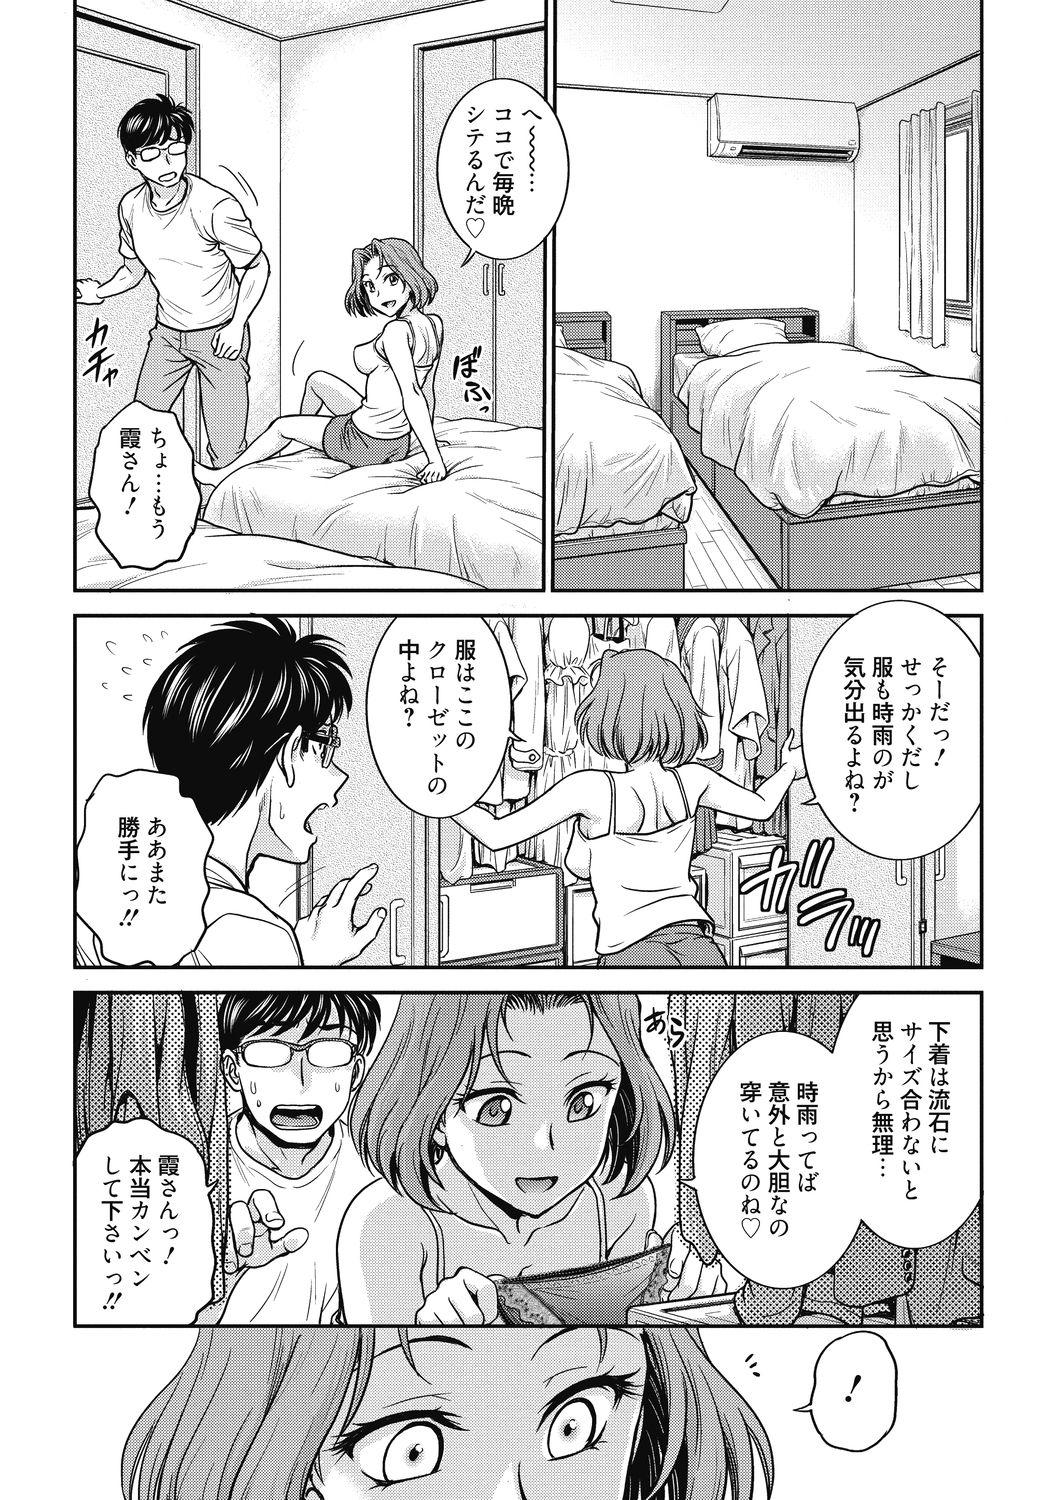 Kanojo no Shitagi o Nusundara... - I tried to steal her underwear... 114